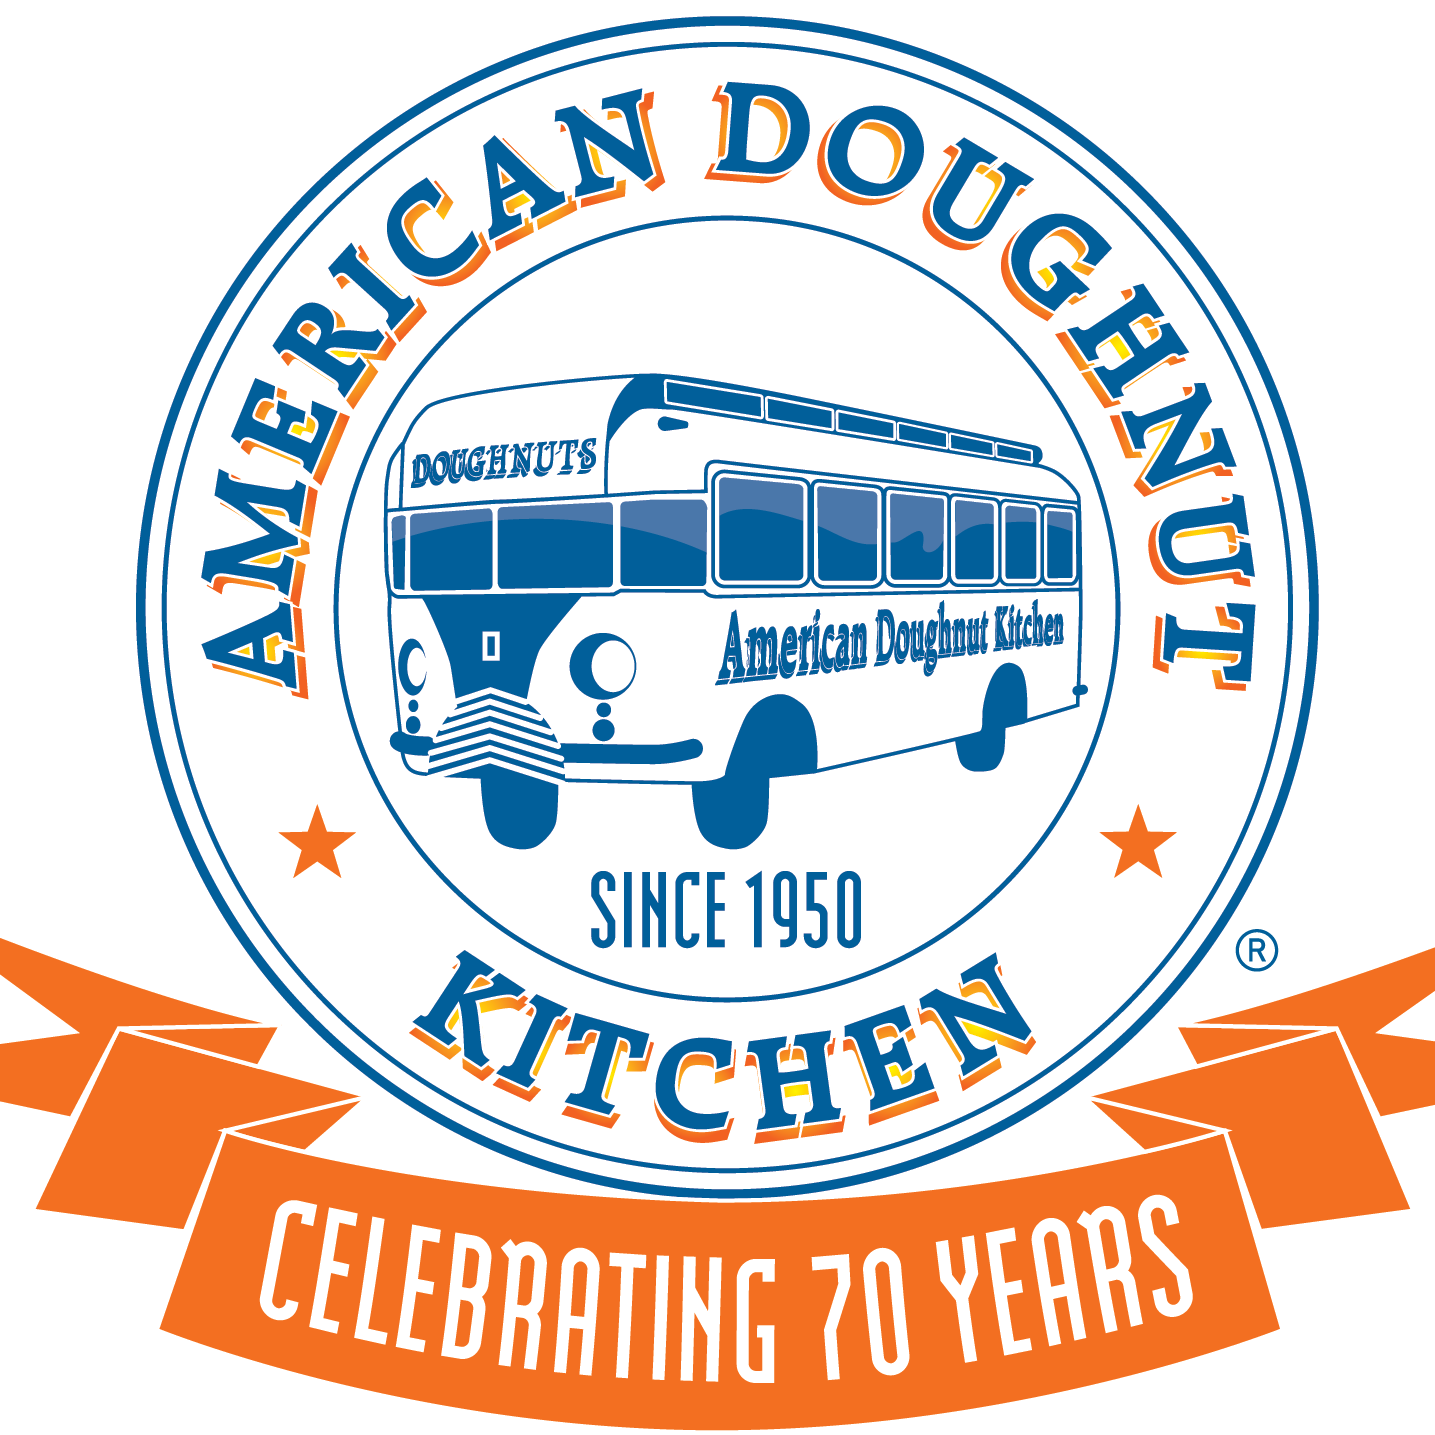 ADK (American Doughnut Kitchen) Logo - QVM (Queen Vic Market)